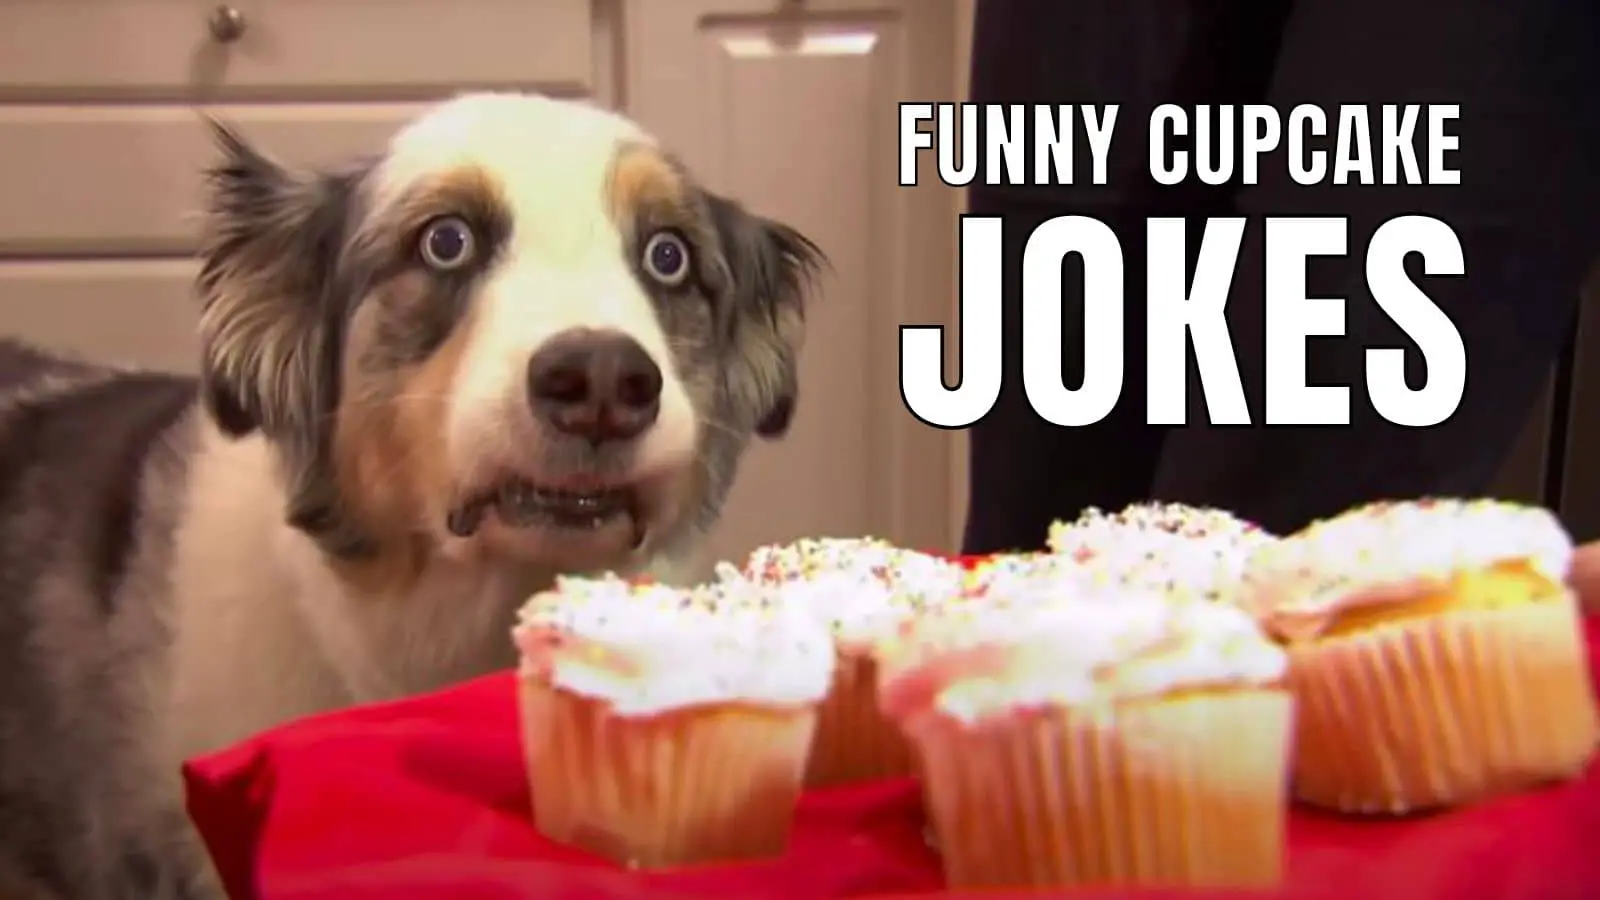 Funny Cupcake Jokes on Dessert